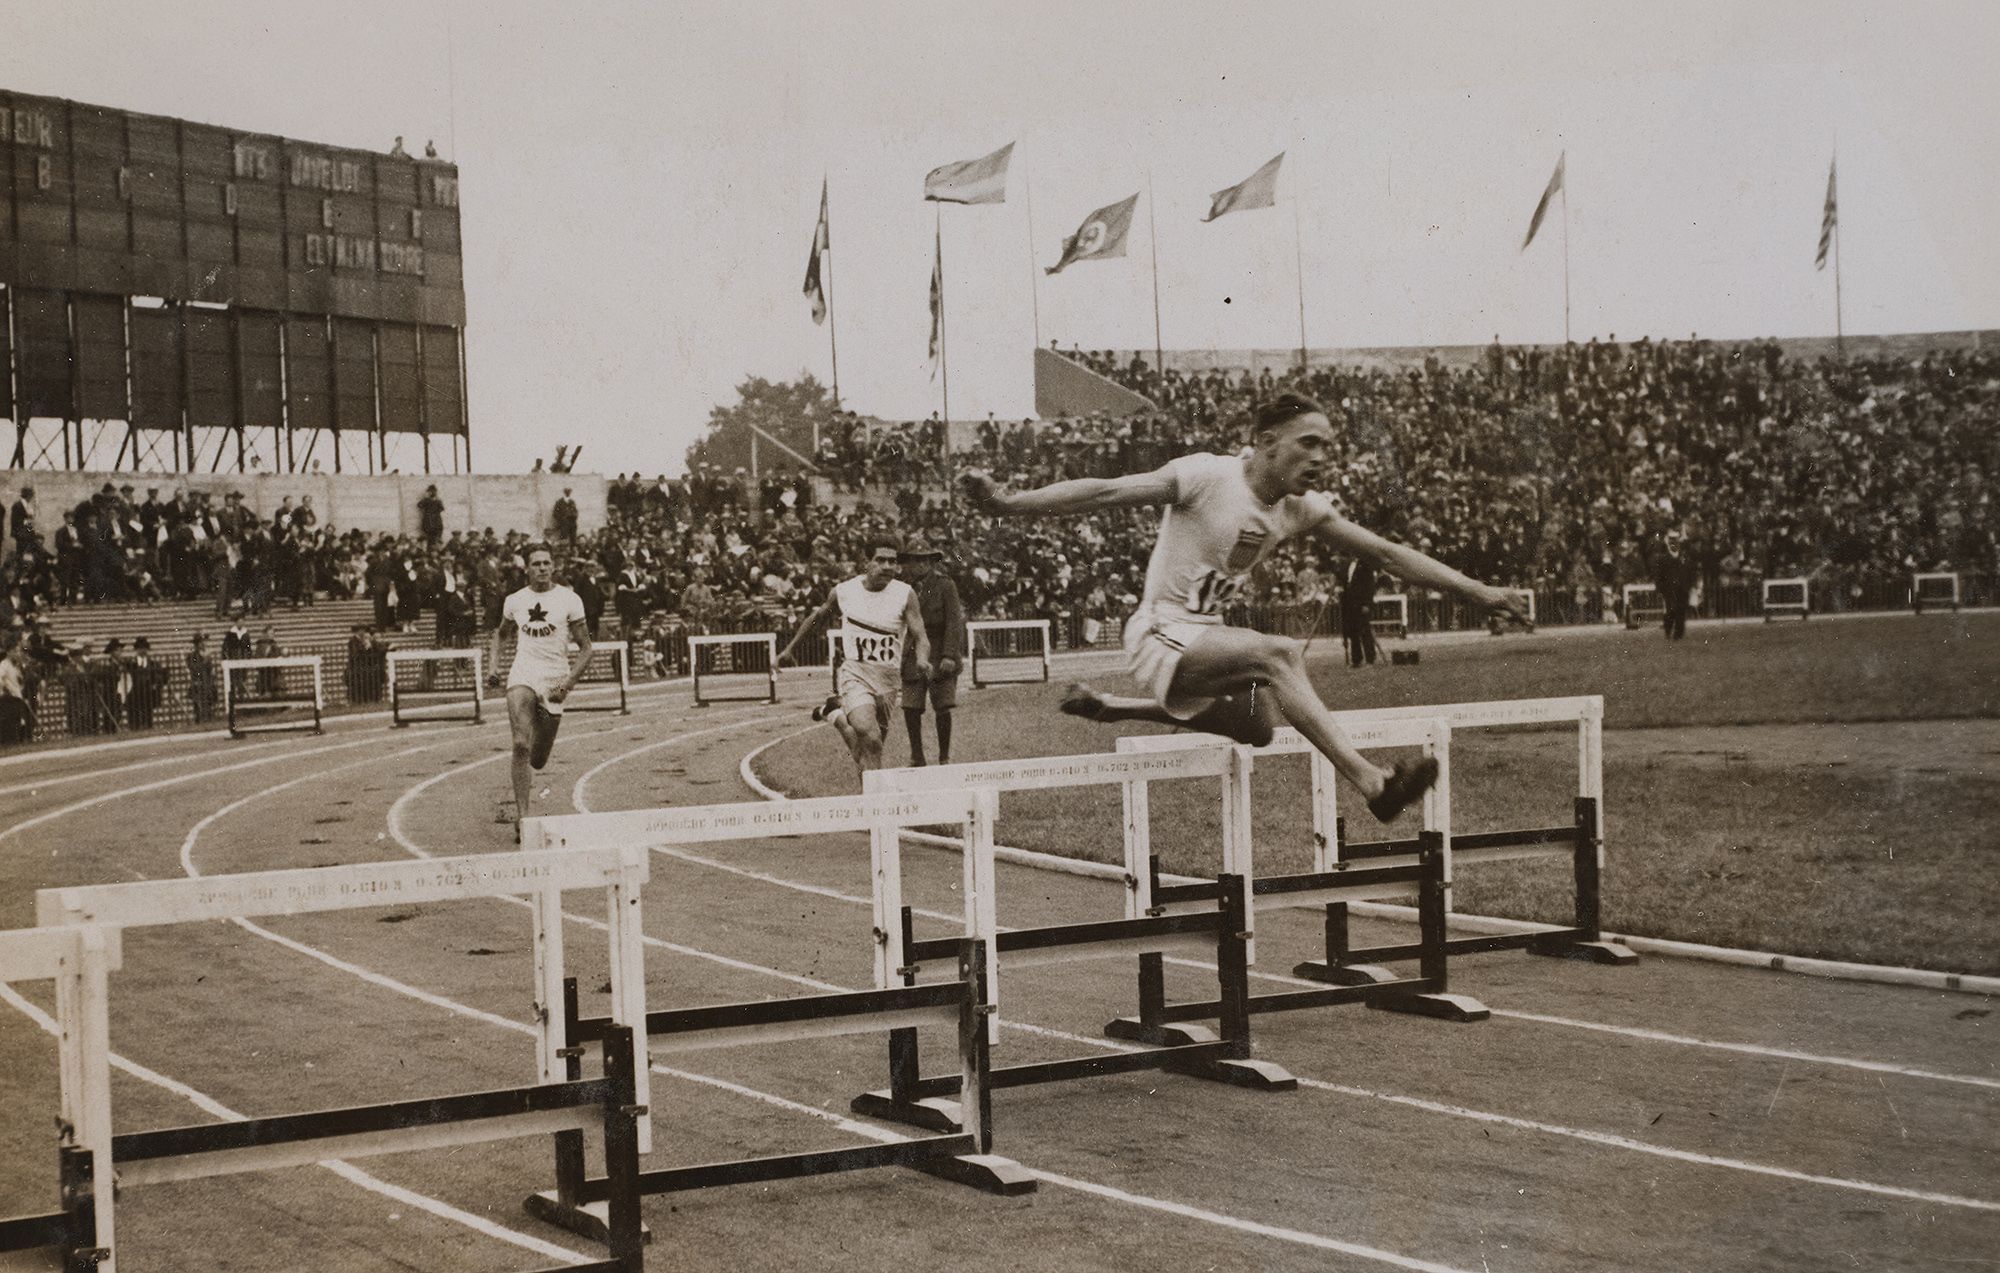 The men's 400m hurdles at the 1924 Olympic Games